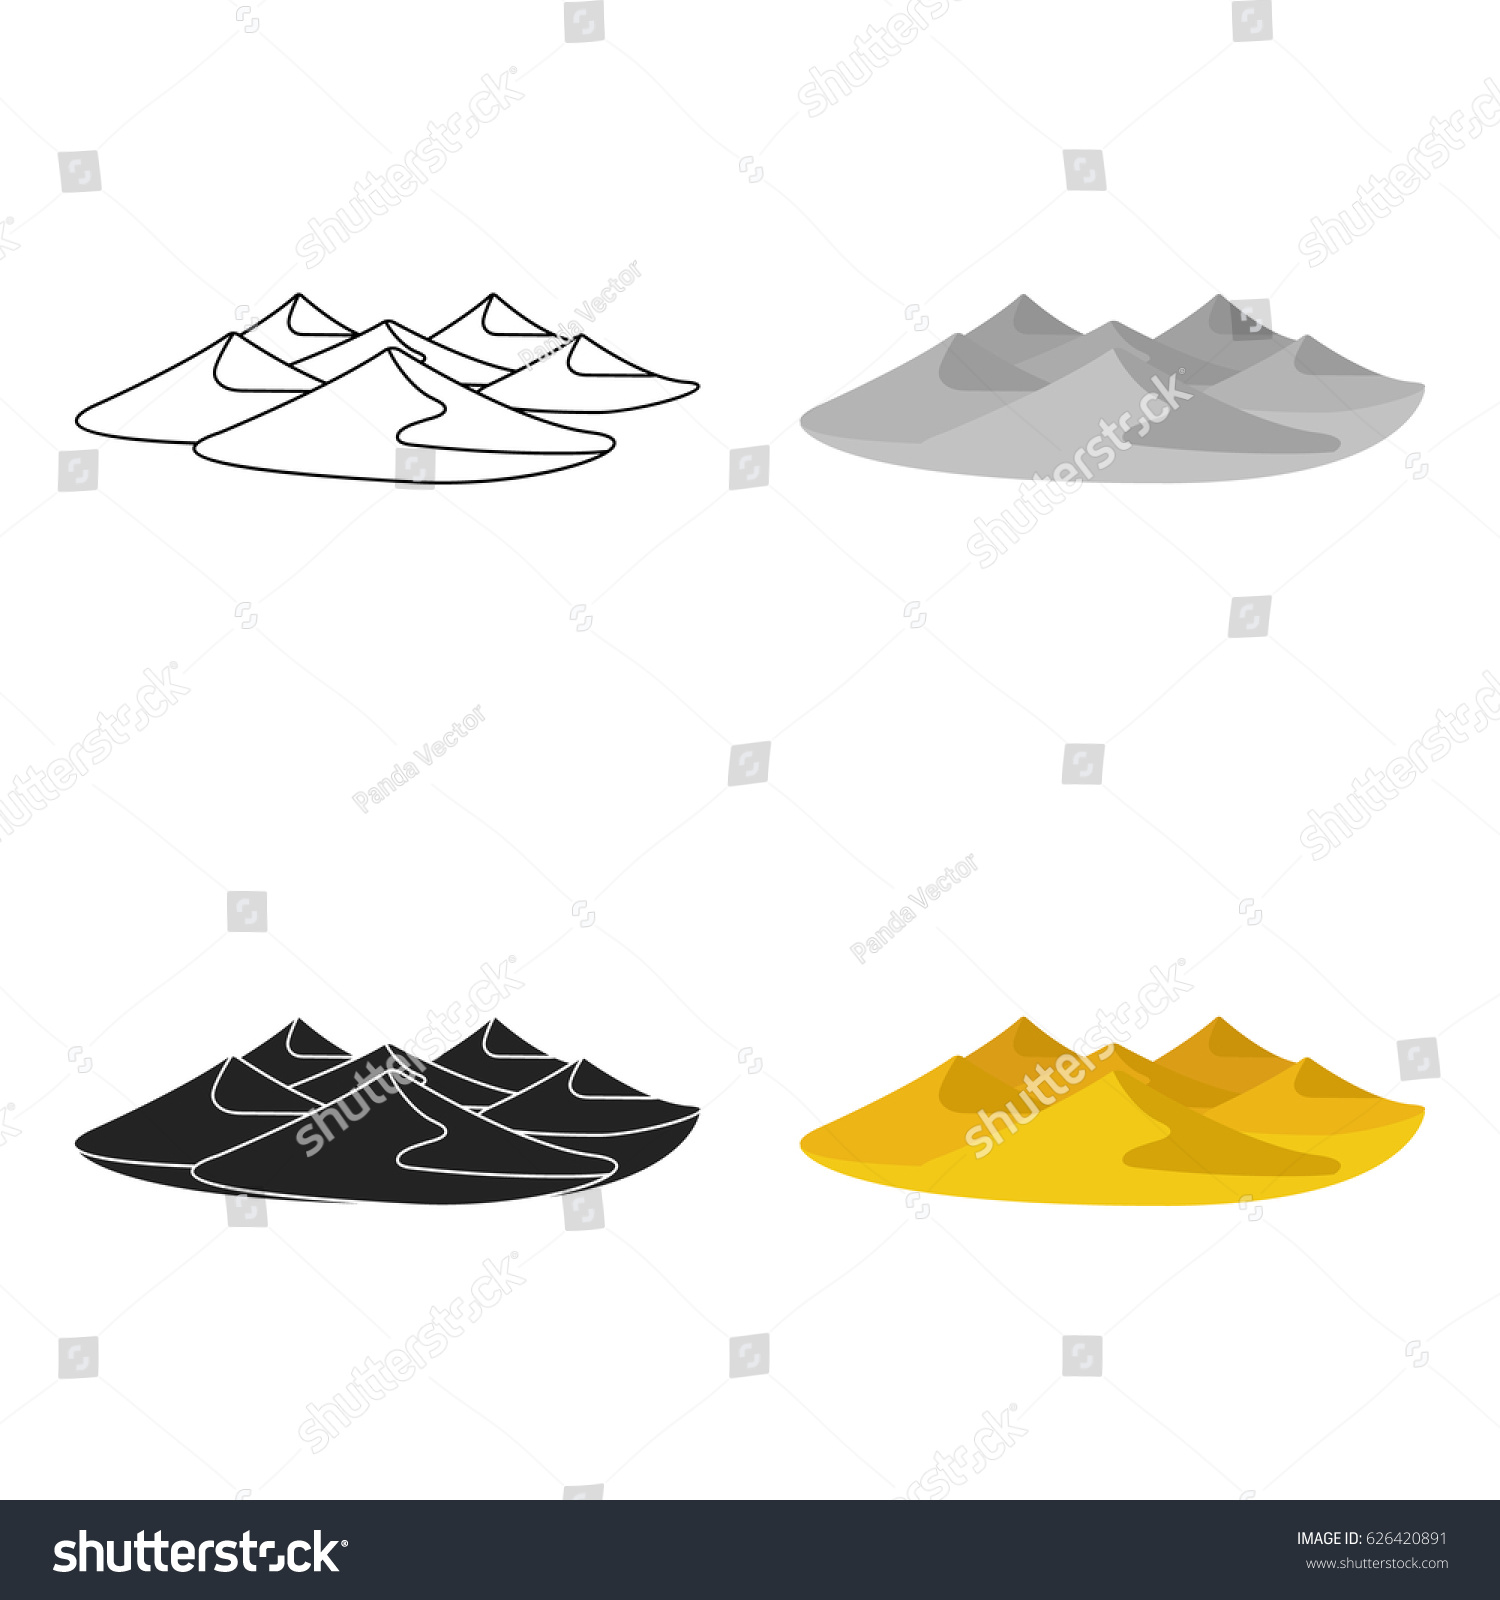 SVG of Dunes icon in cartoon style isolated on white background. Arab Emirates symbol stock vector illustration. svg